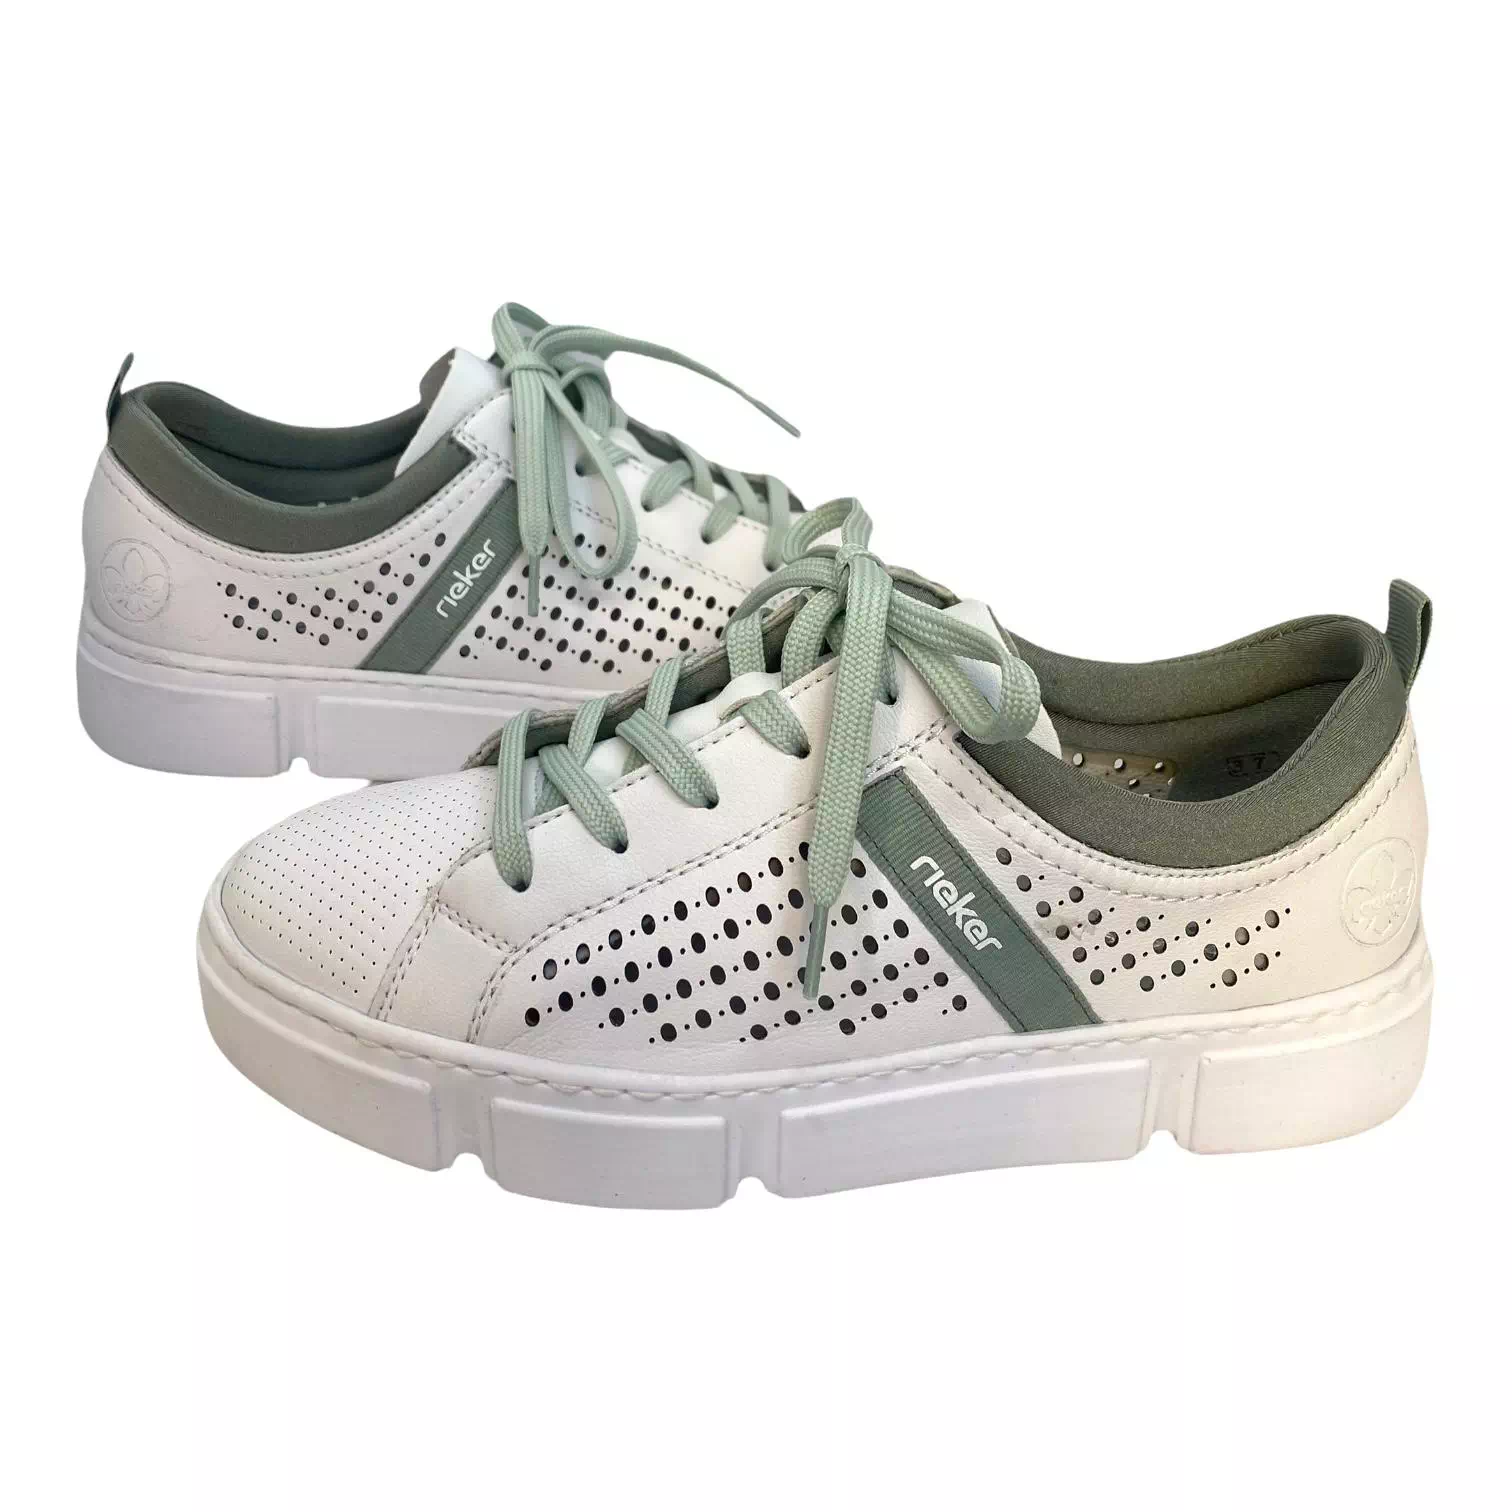 Pantofi sport Rieker albi cu perforatii si detalii verzi